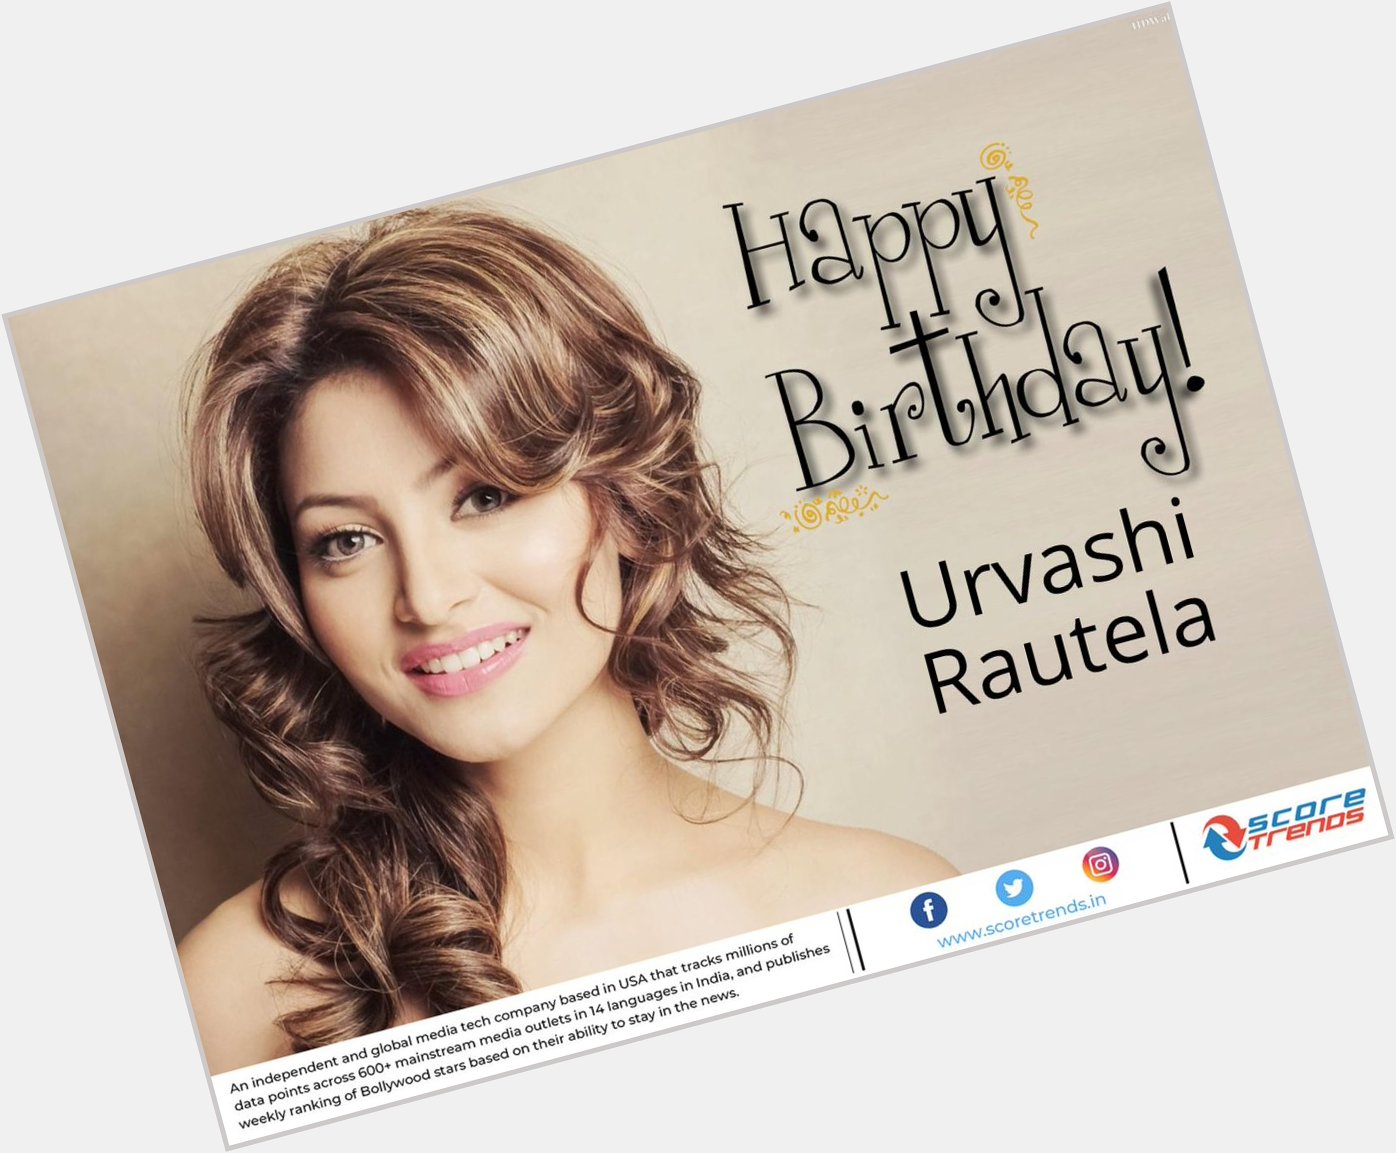 Score Trends wishes Urvashi Rautela a Happy Birthday!! 